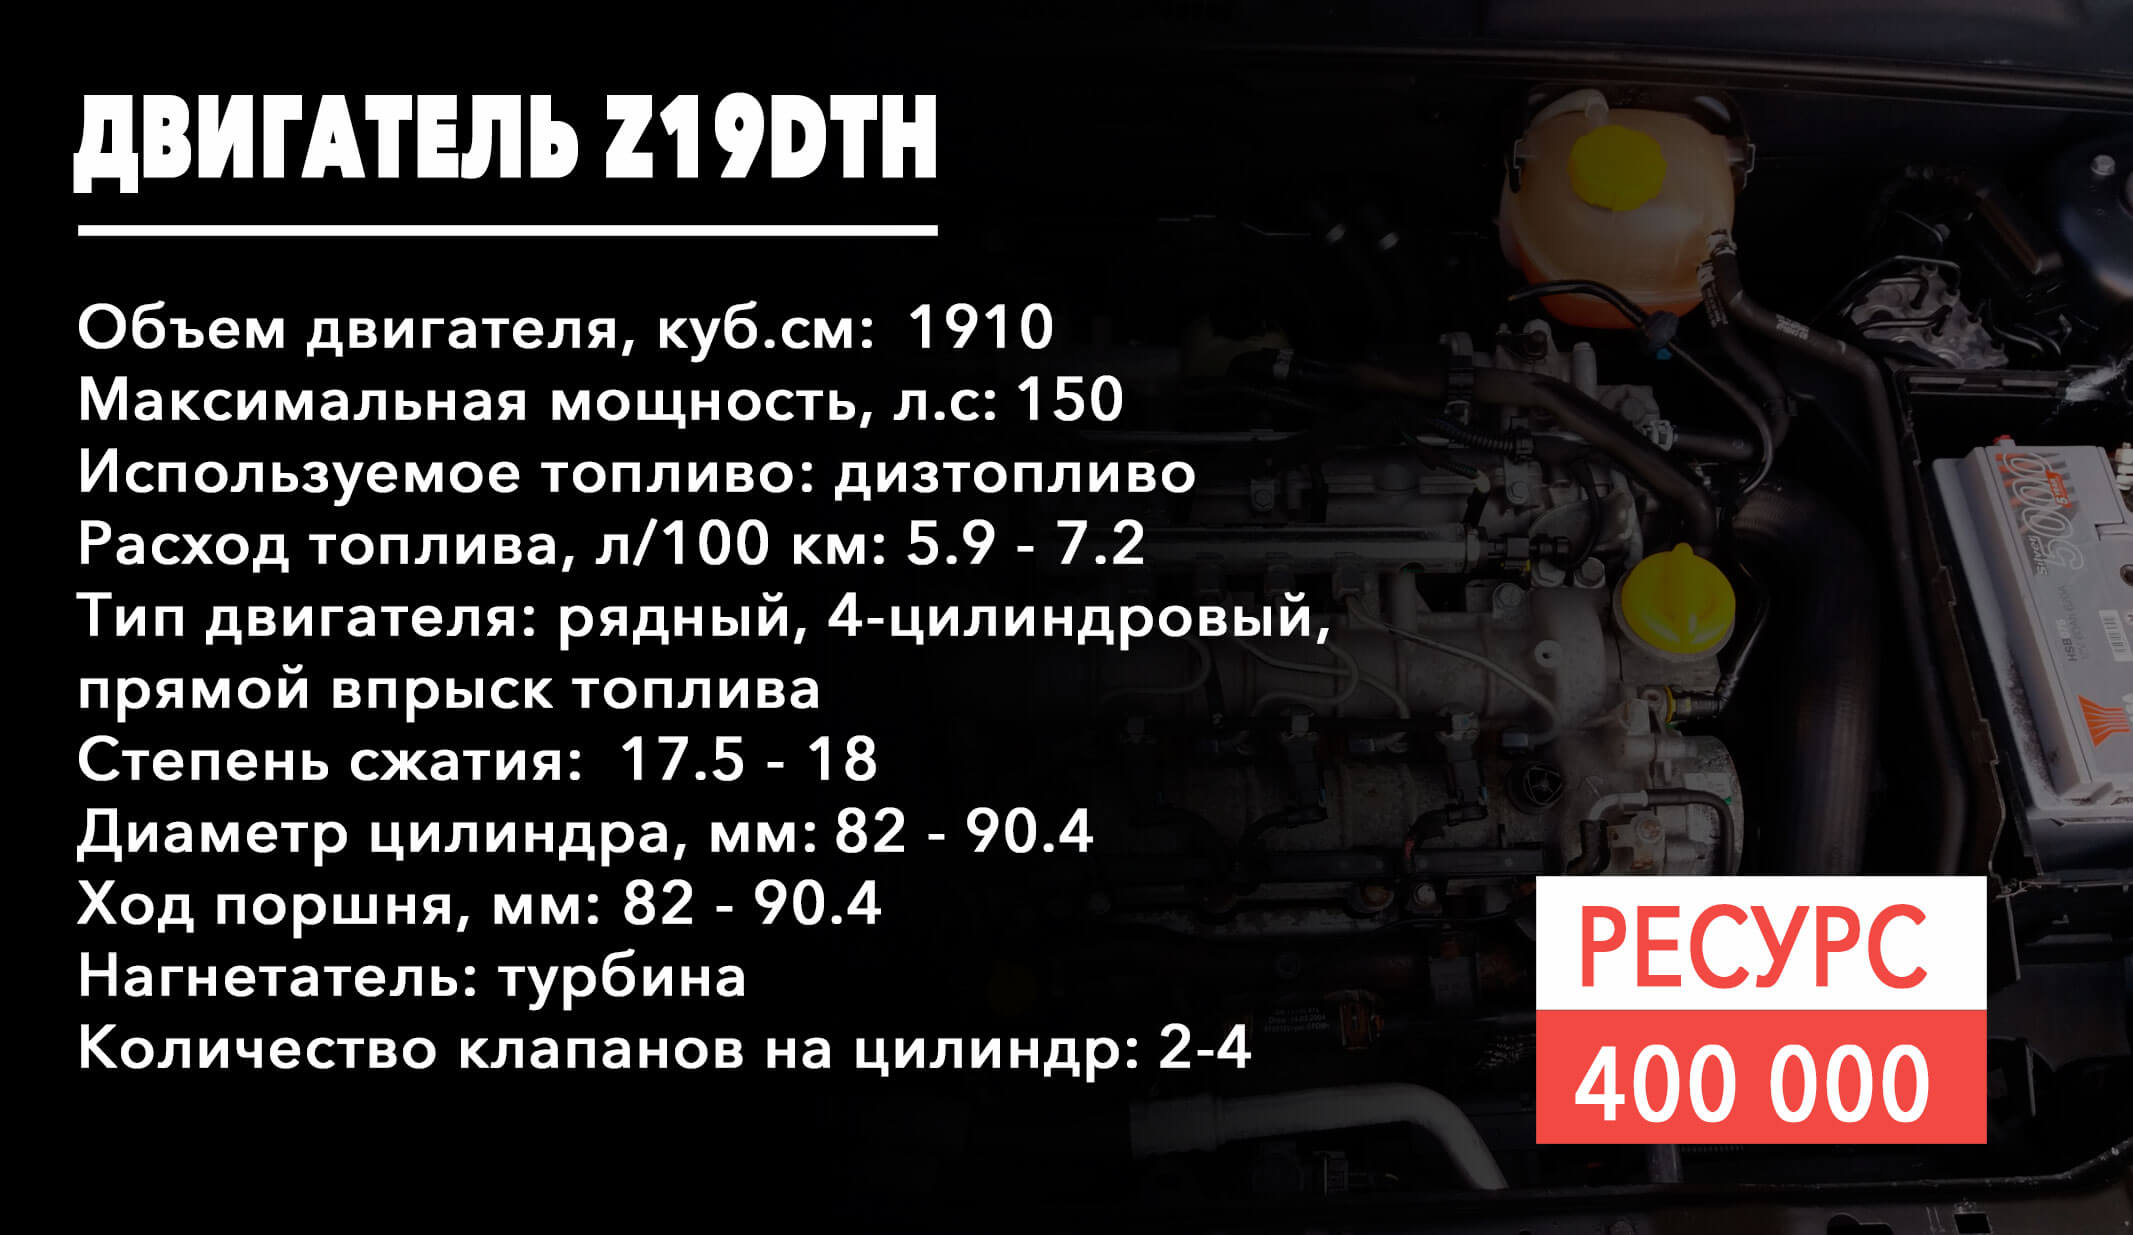  двигатель Z19DTH